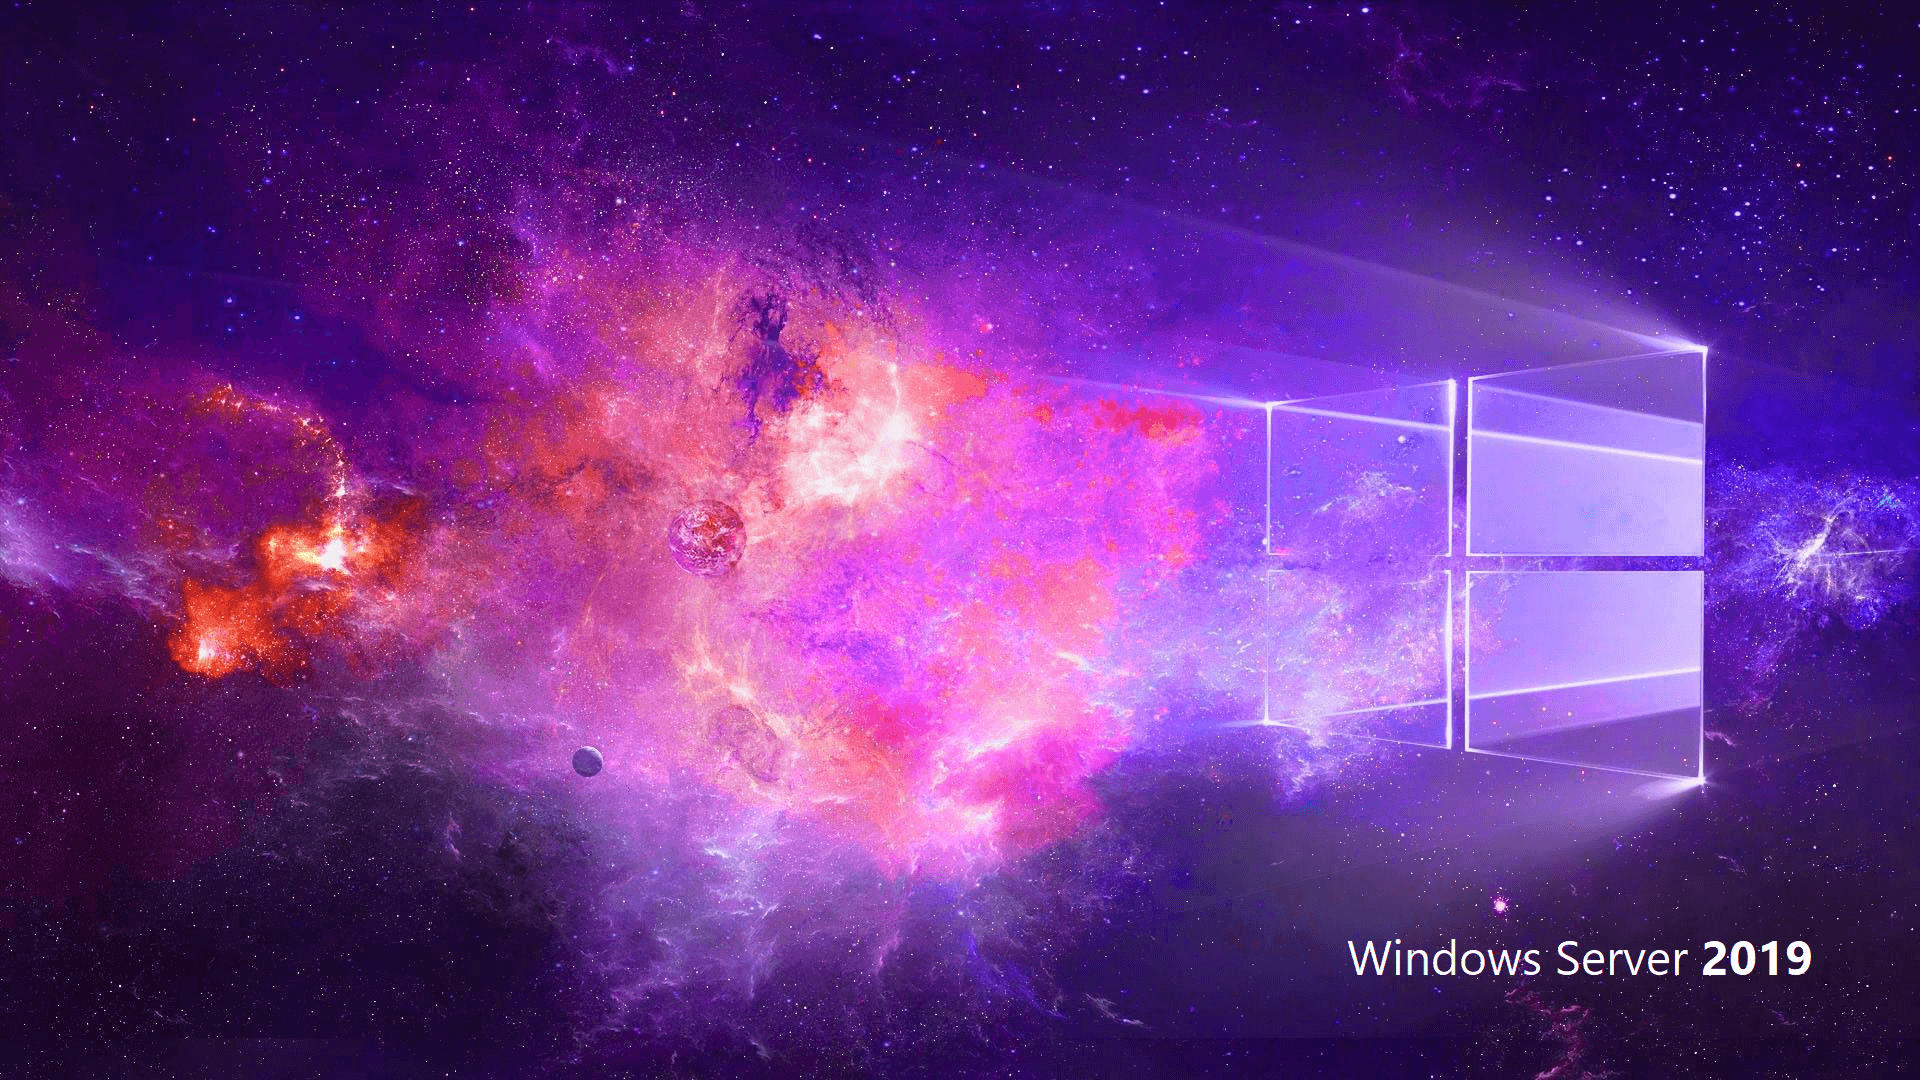 My Windows Server 2019 wallpaper